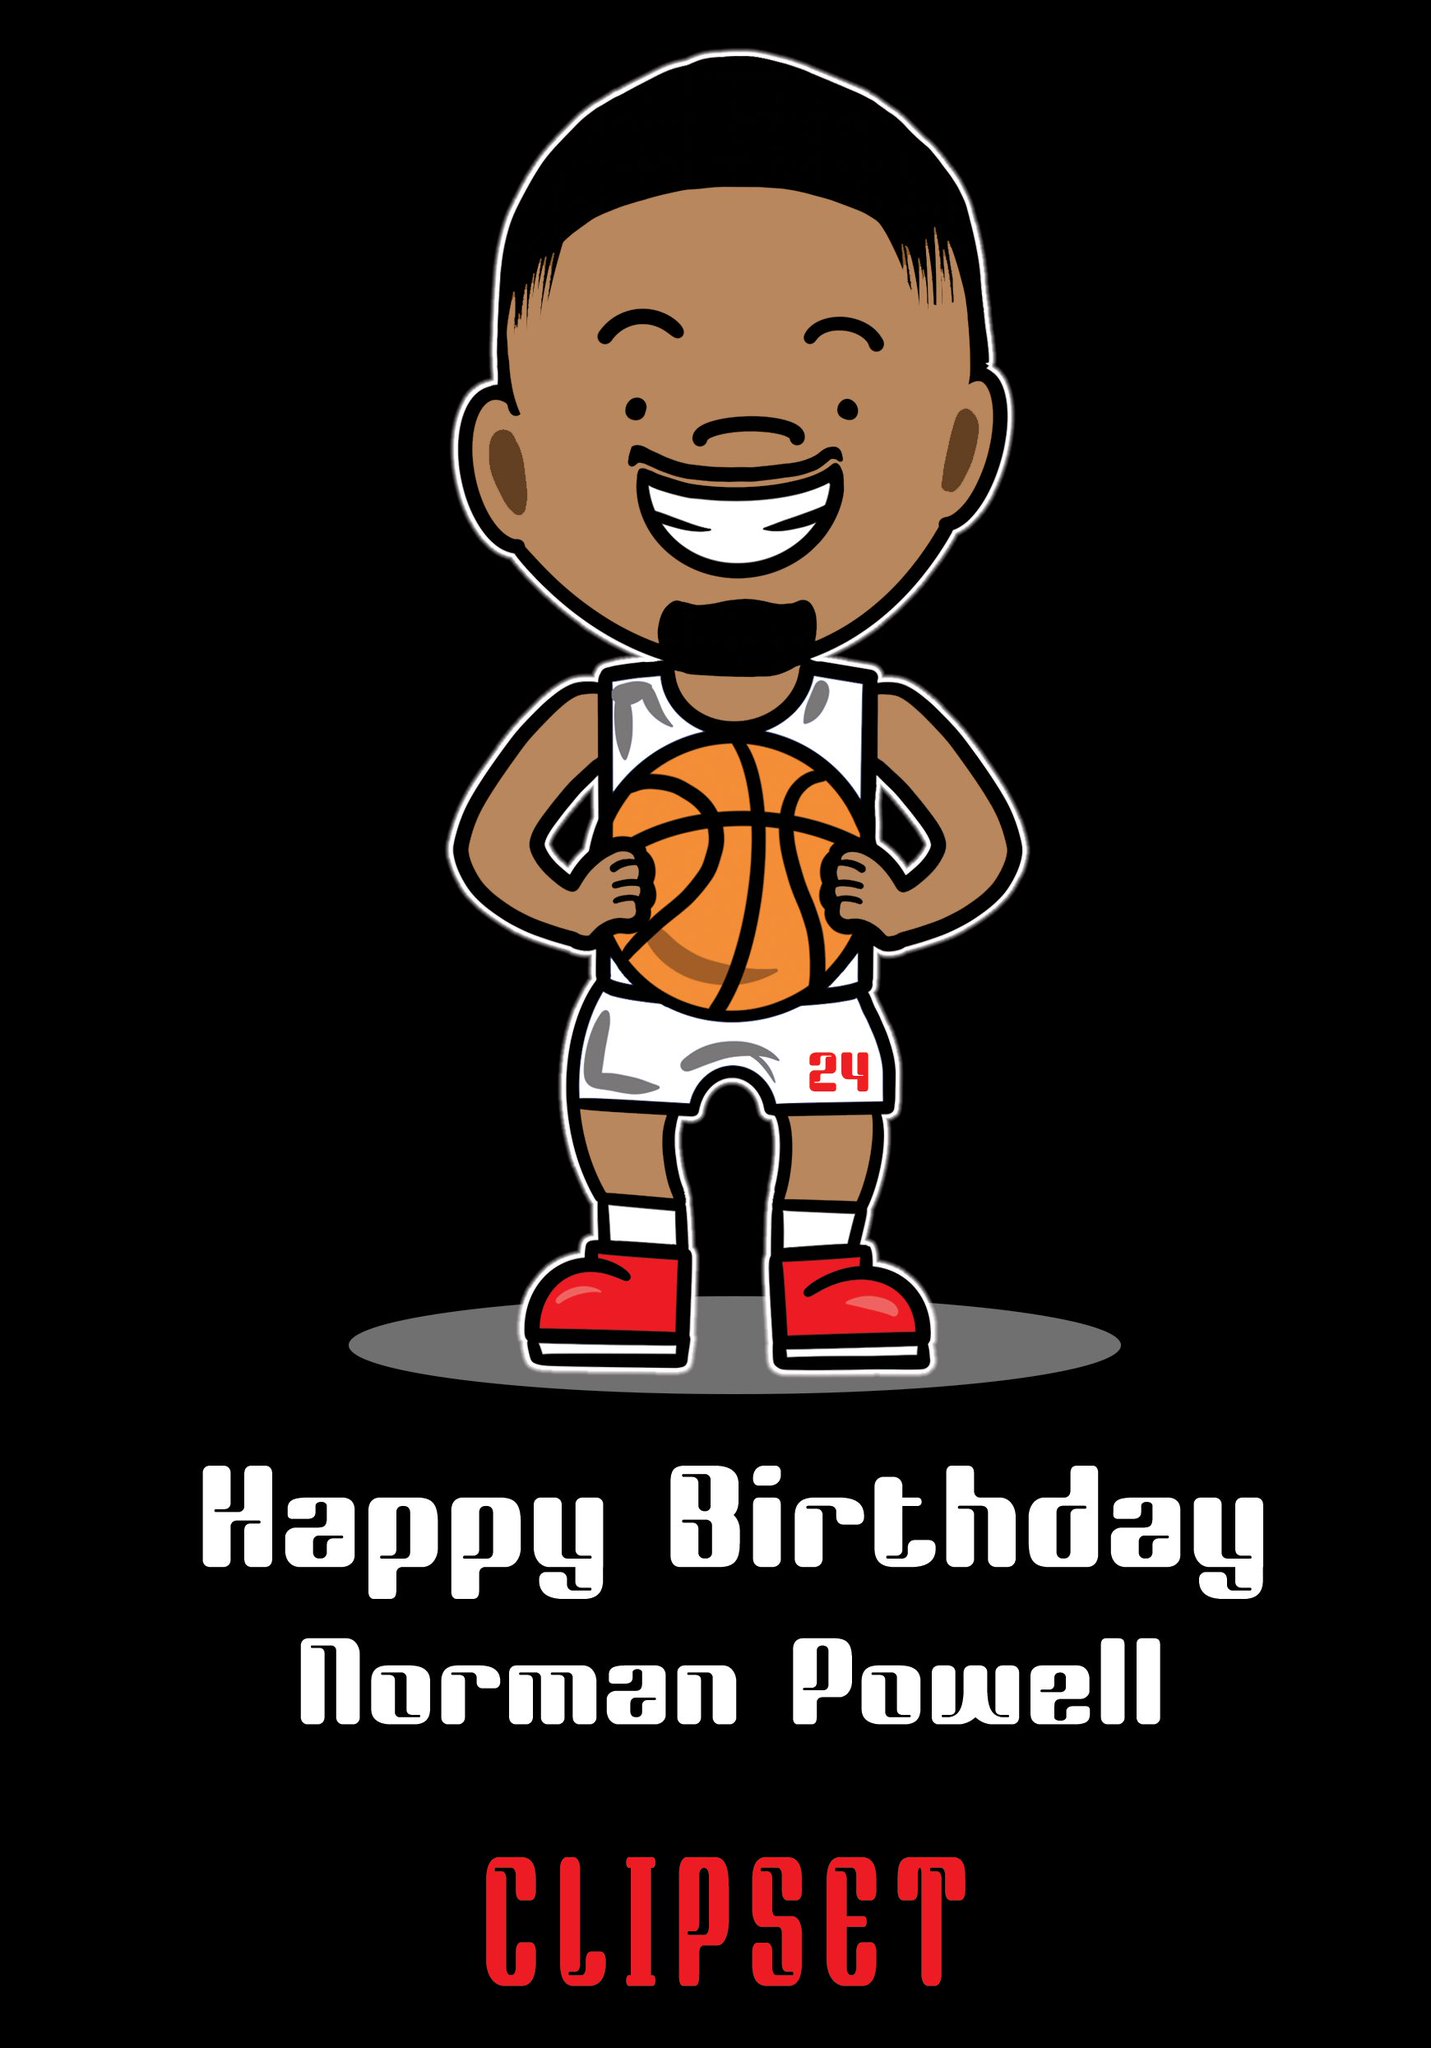 Happy birthday to Norman Powell  